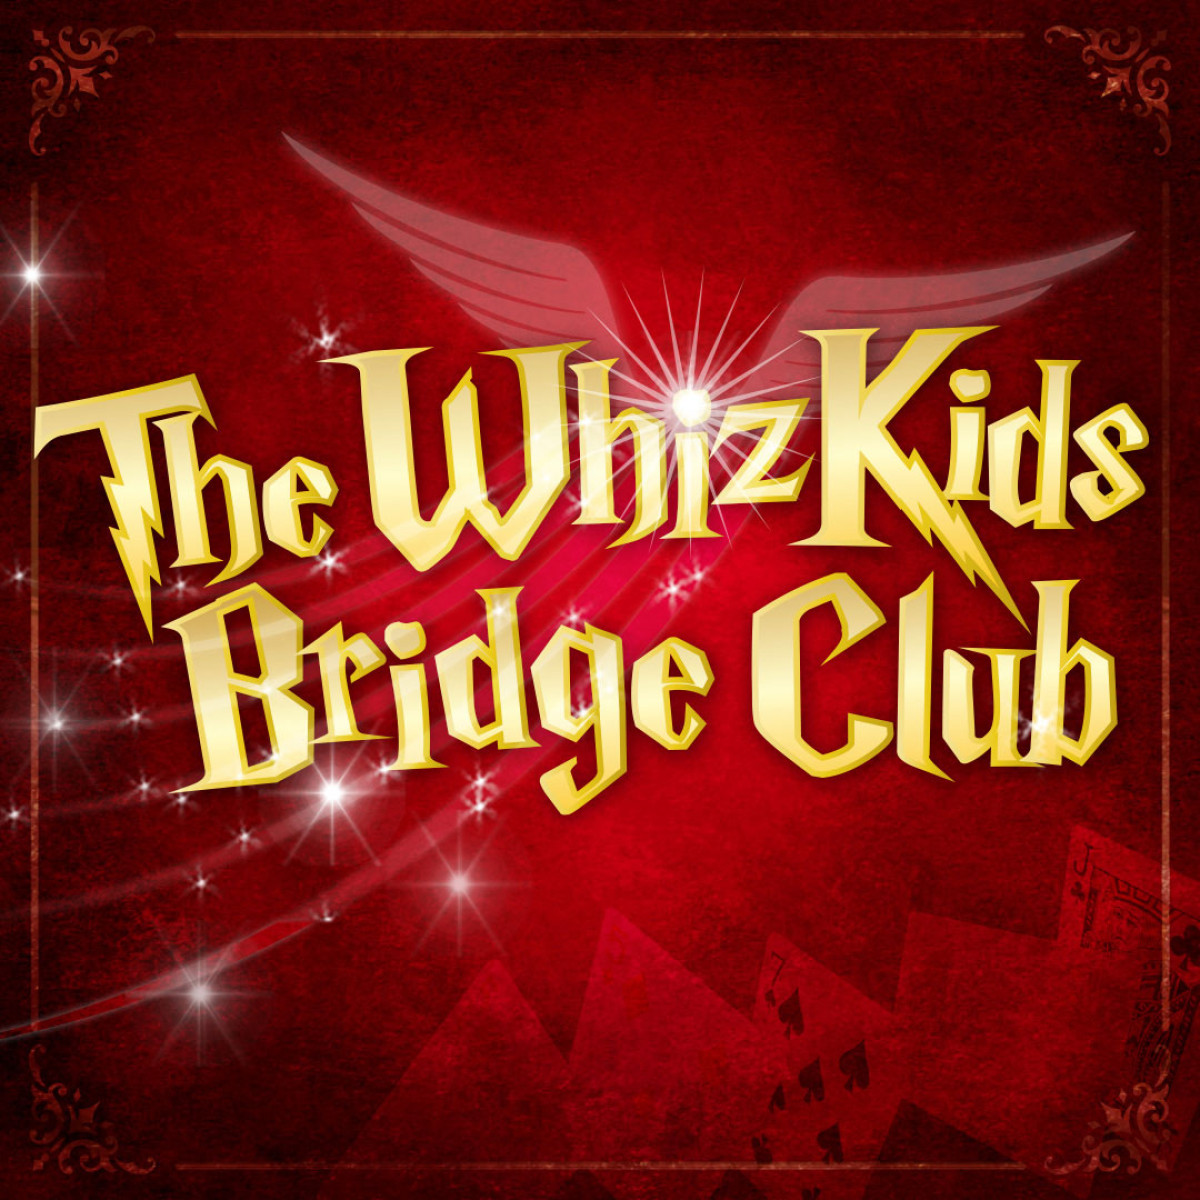 WhizKids Bridge Club